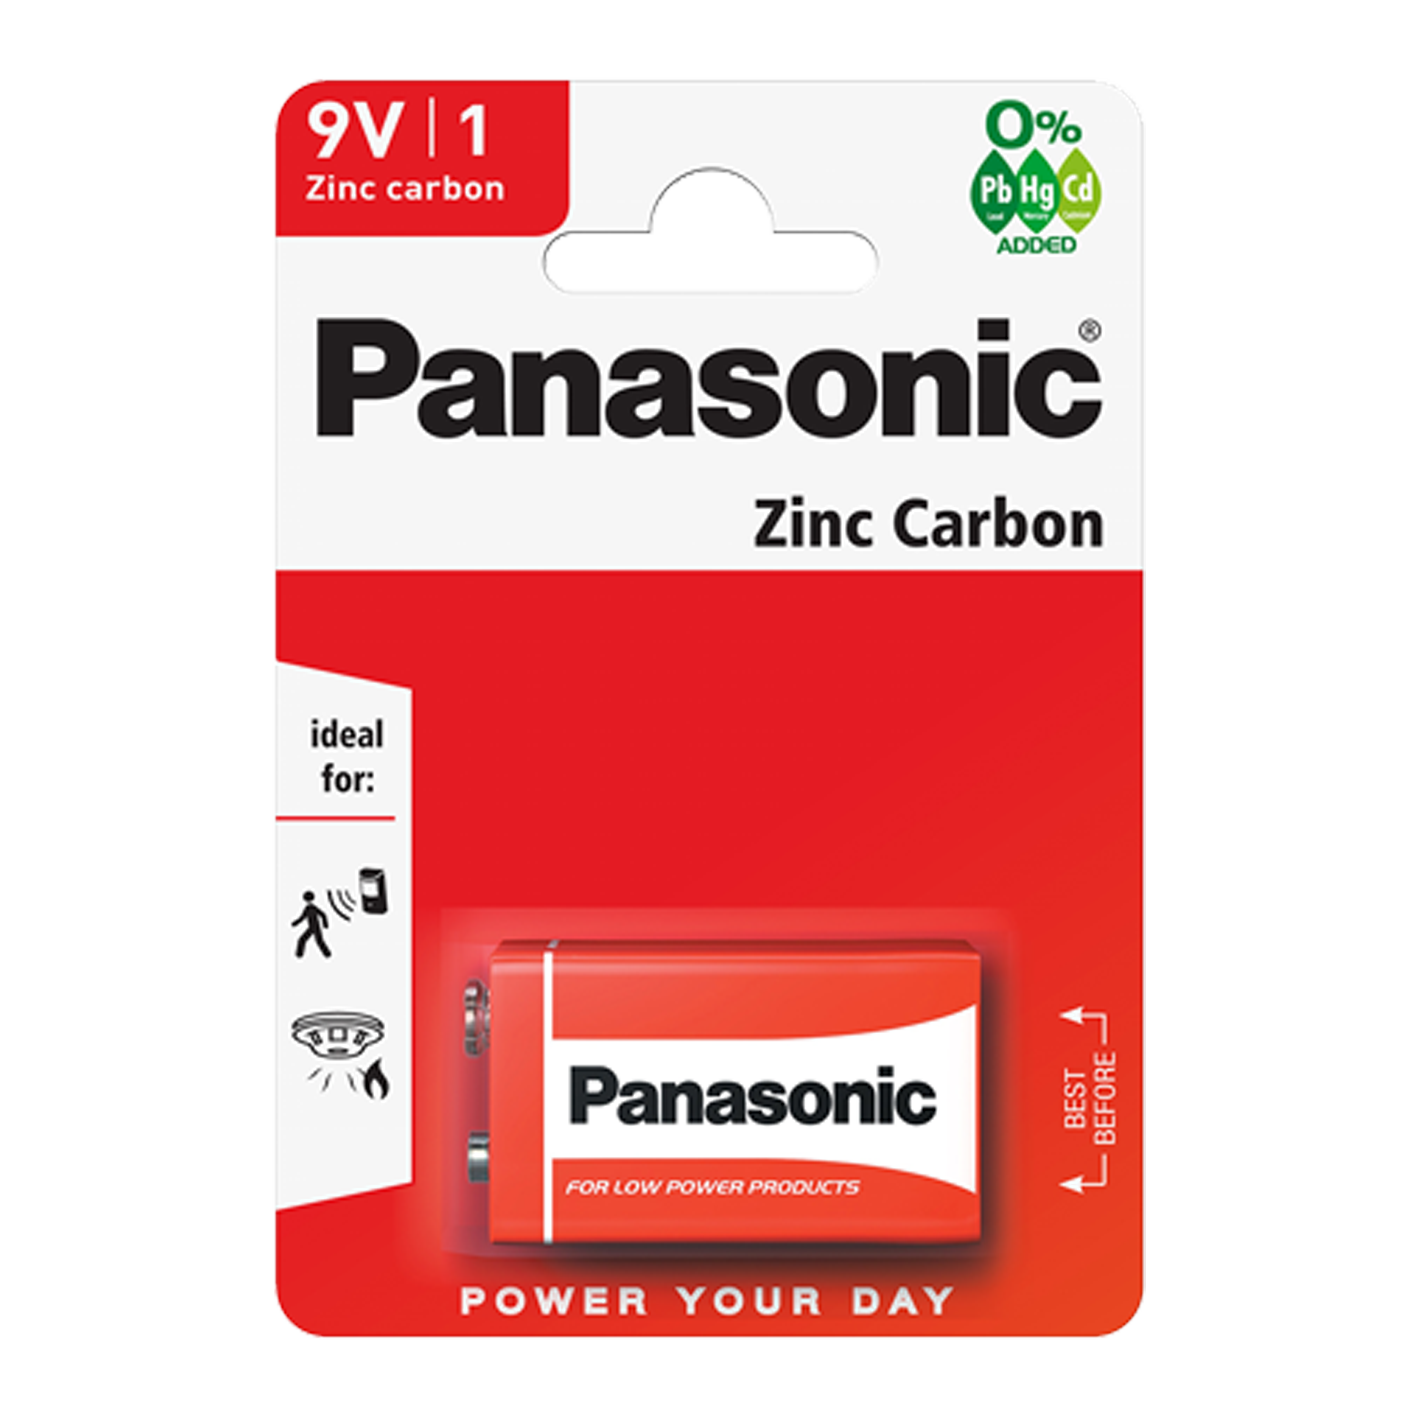 Panasonic 9V Zinc, Pack of 1